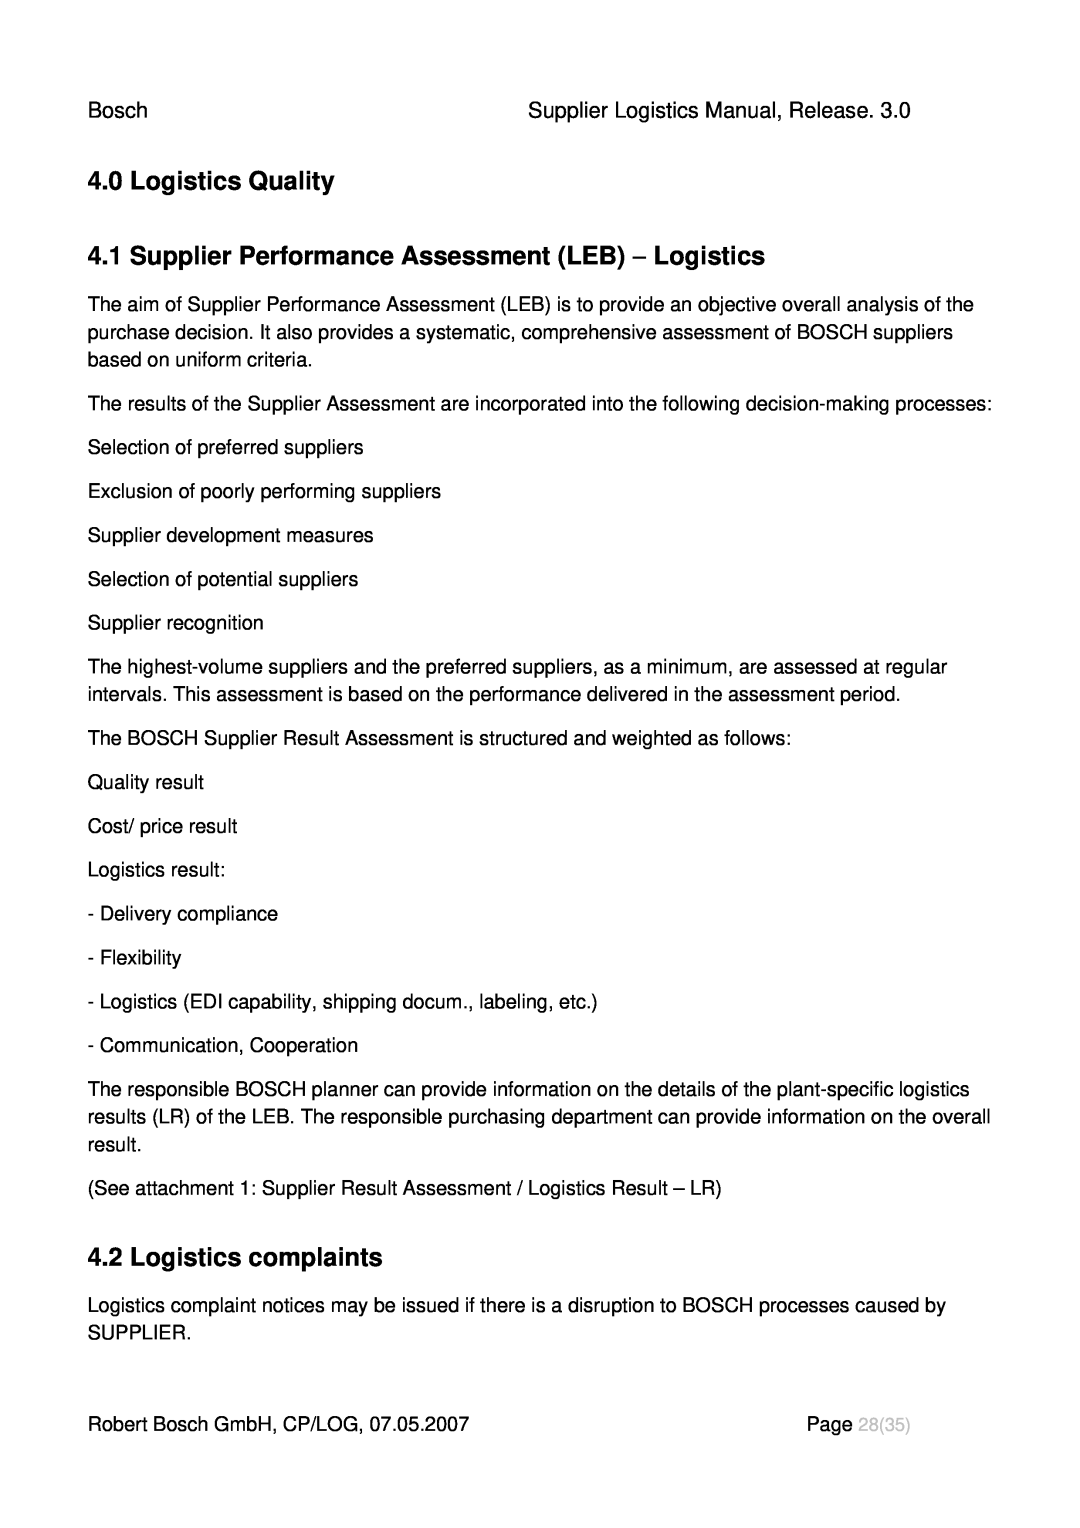 Bosch Appliances 3 manual 4.0Logistics Quality, Logistics complaints, Bosch, Supplier Logistics Manual, Release 